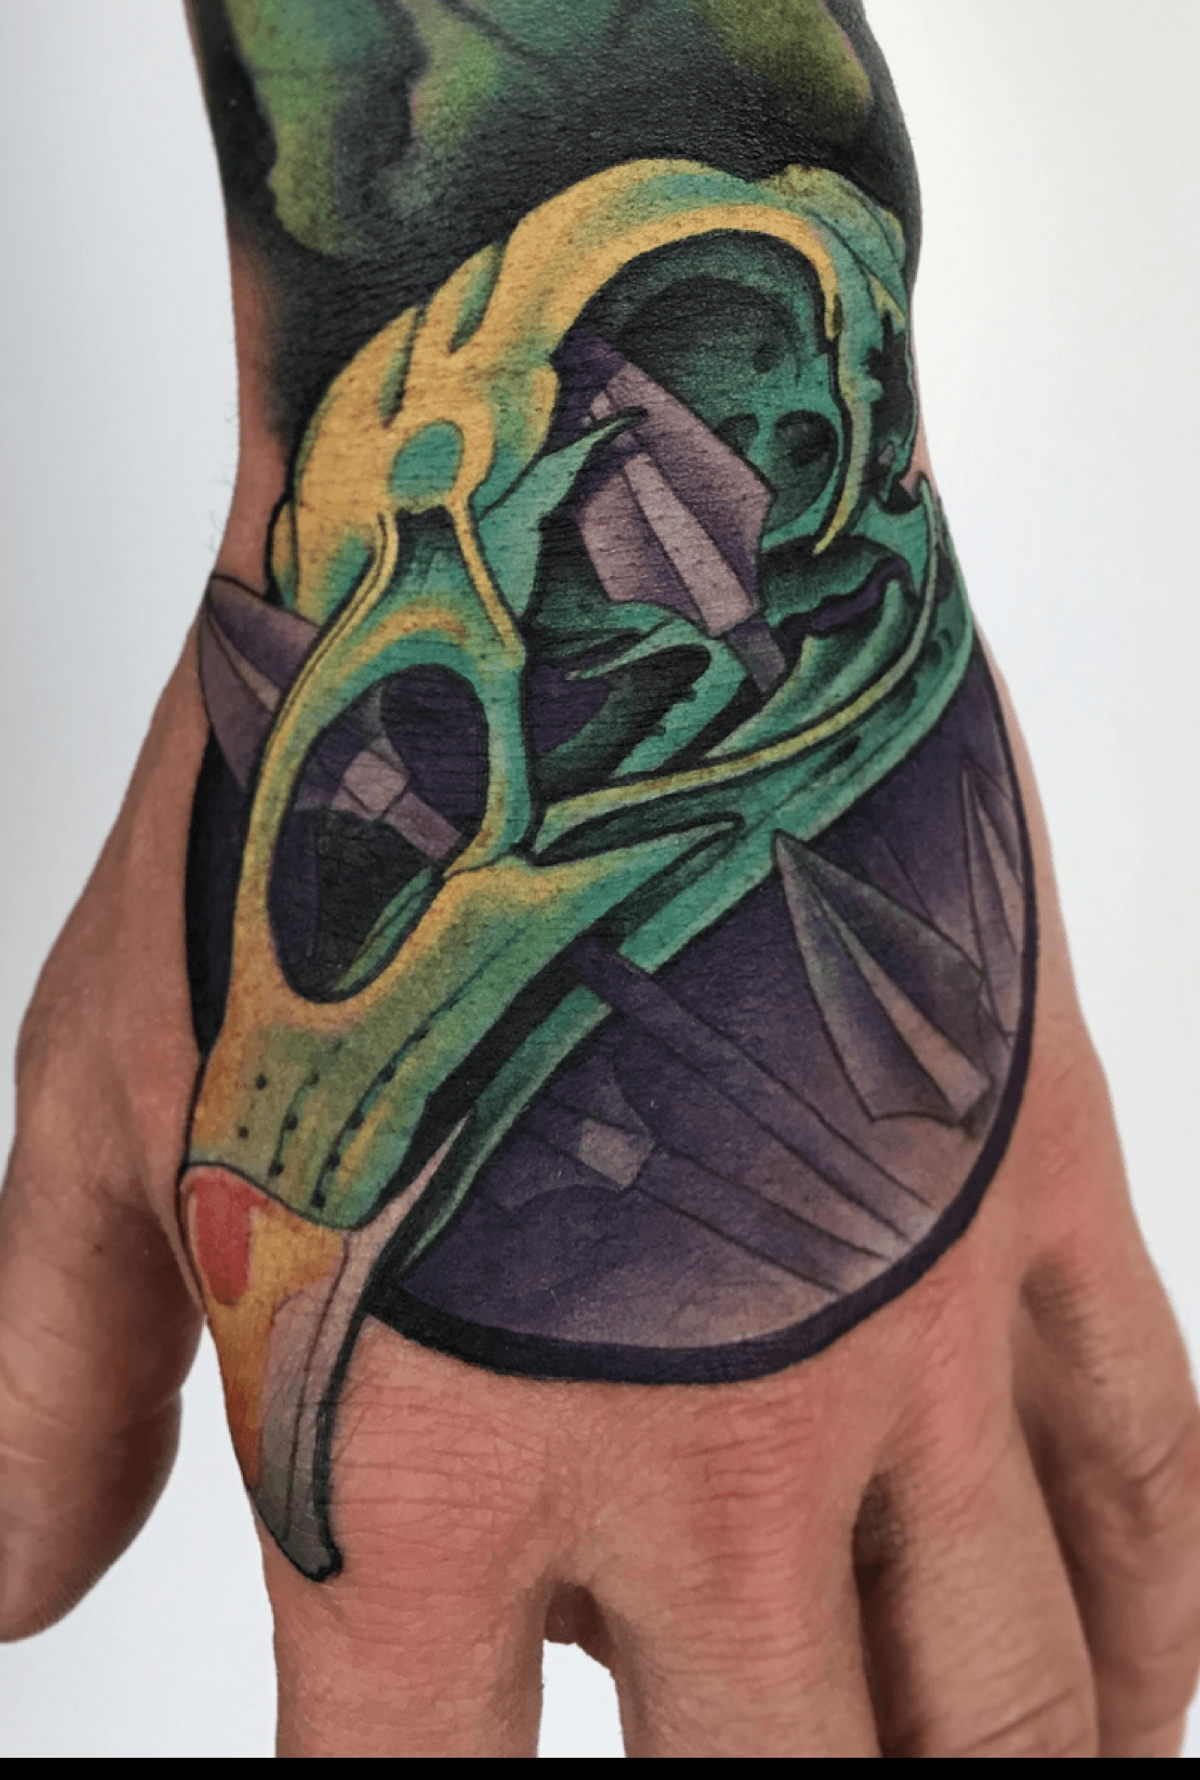 Tattoo uploaded by Jacob Wiman • Turkey skull done at